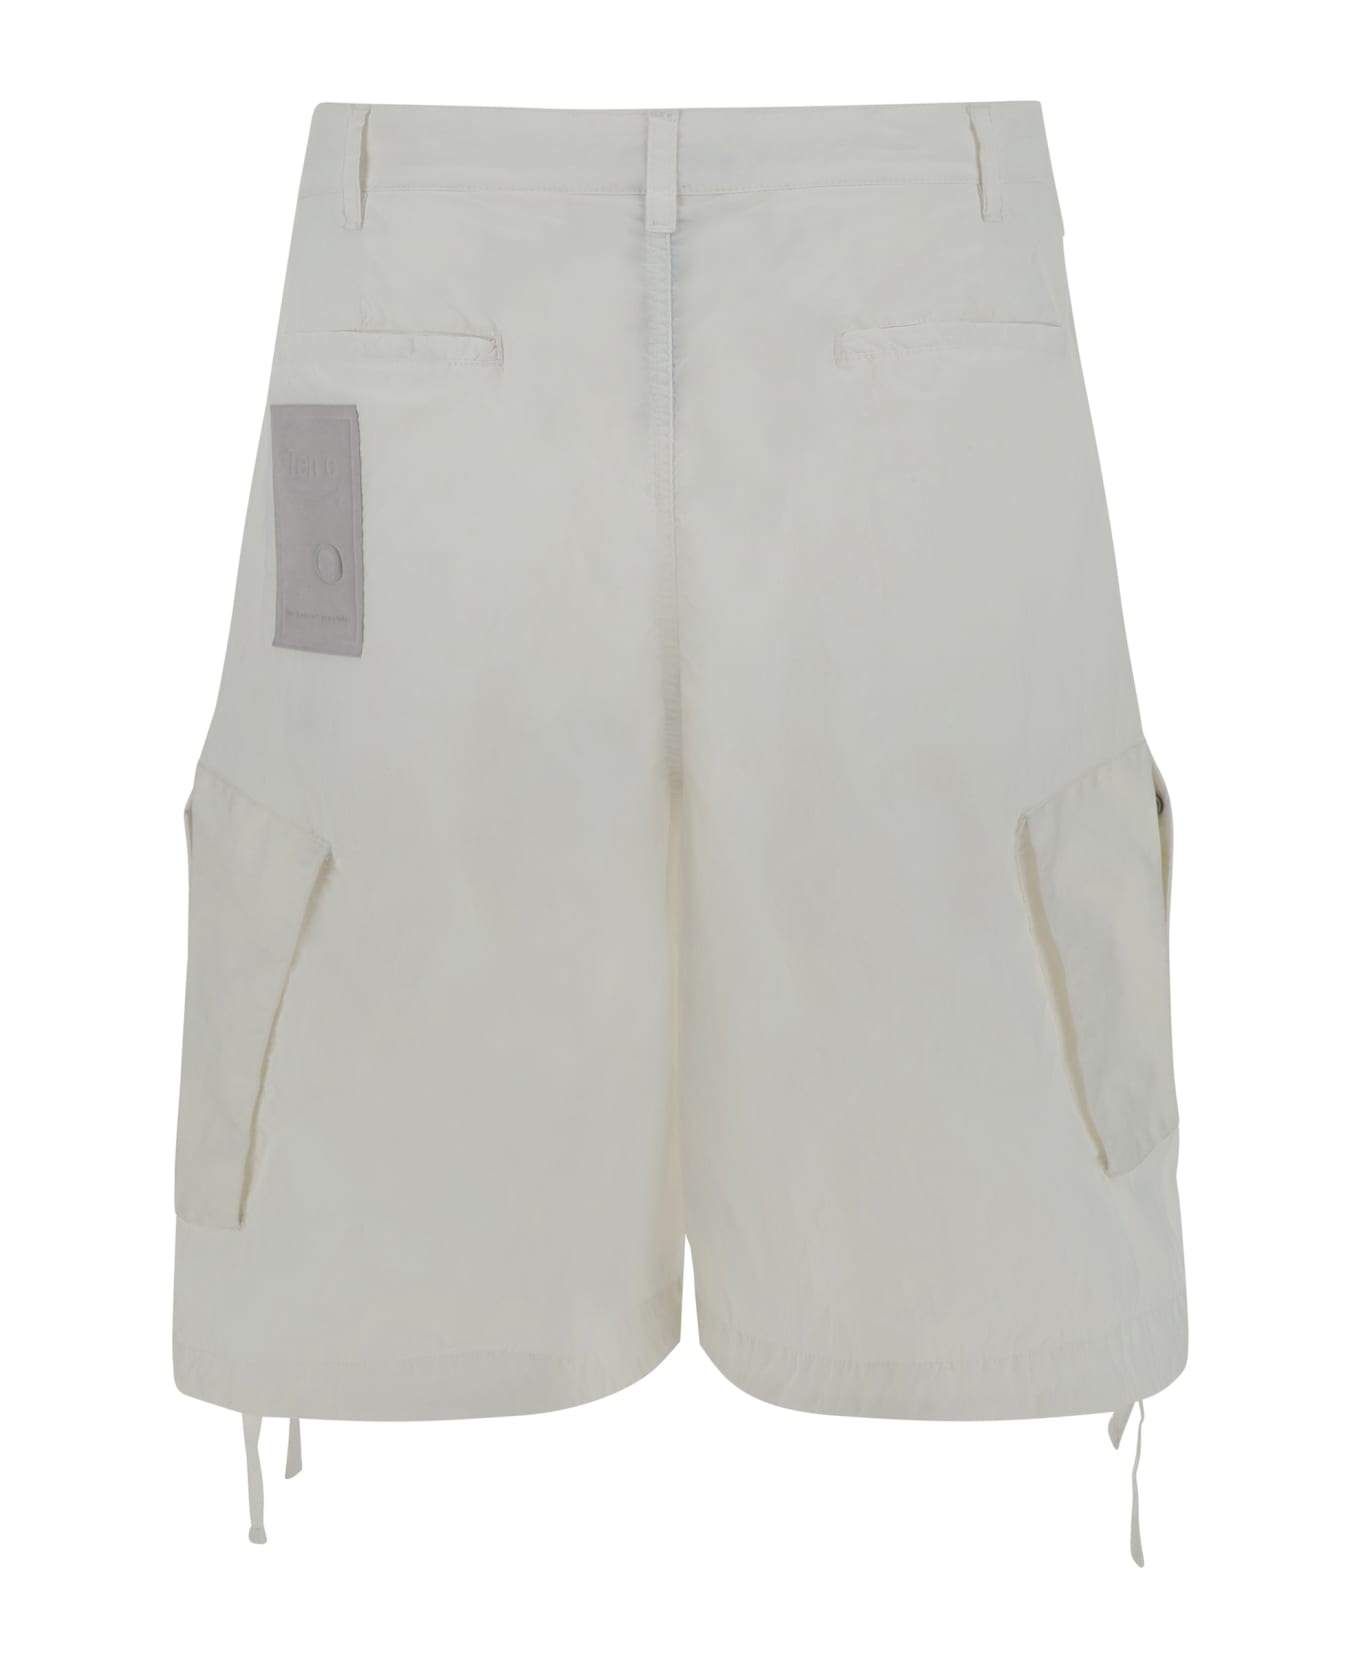 Ten C Shorts - Bianco Neve ショートパンツ